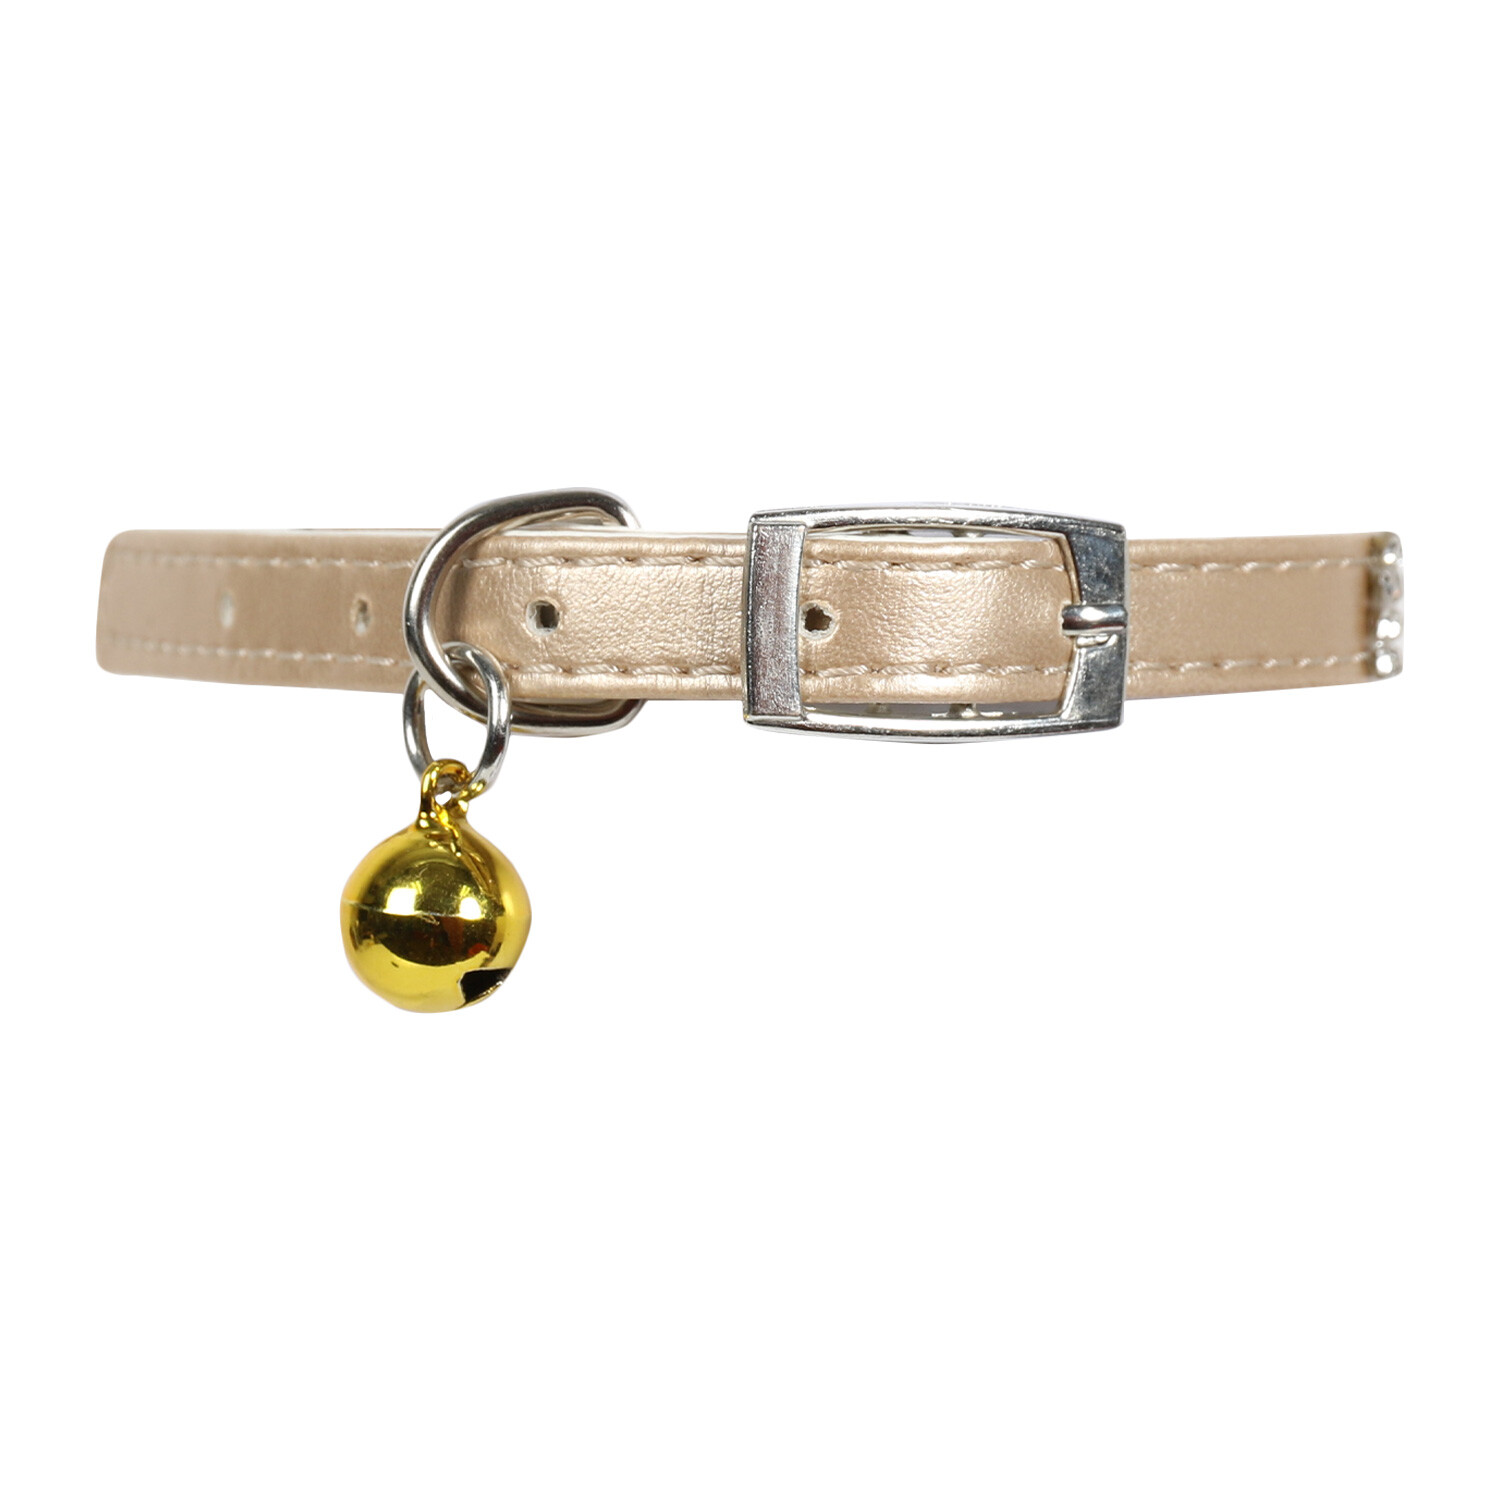 Diamante Cat Collar with Bell - Tan Image 2